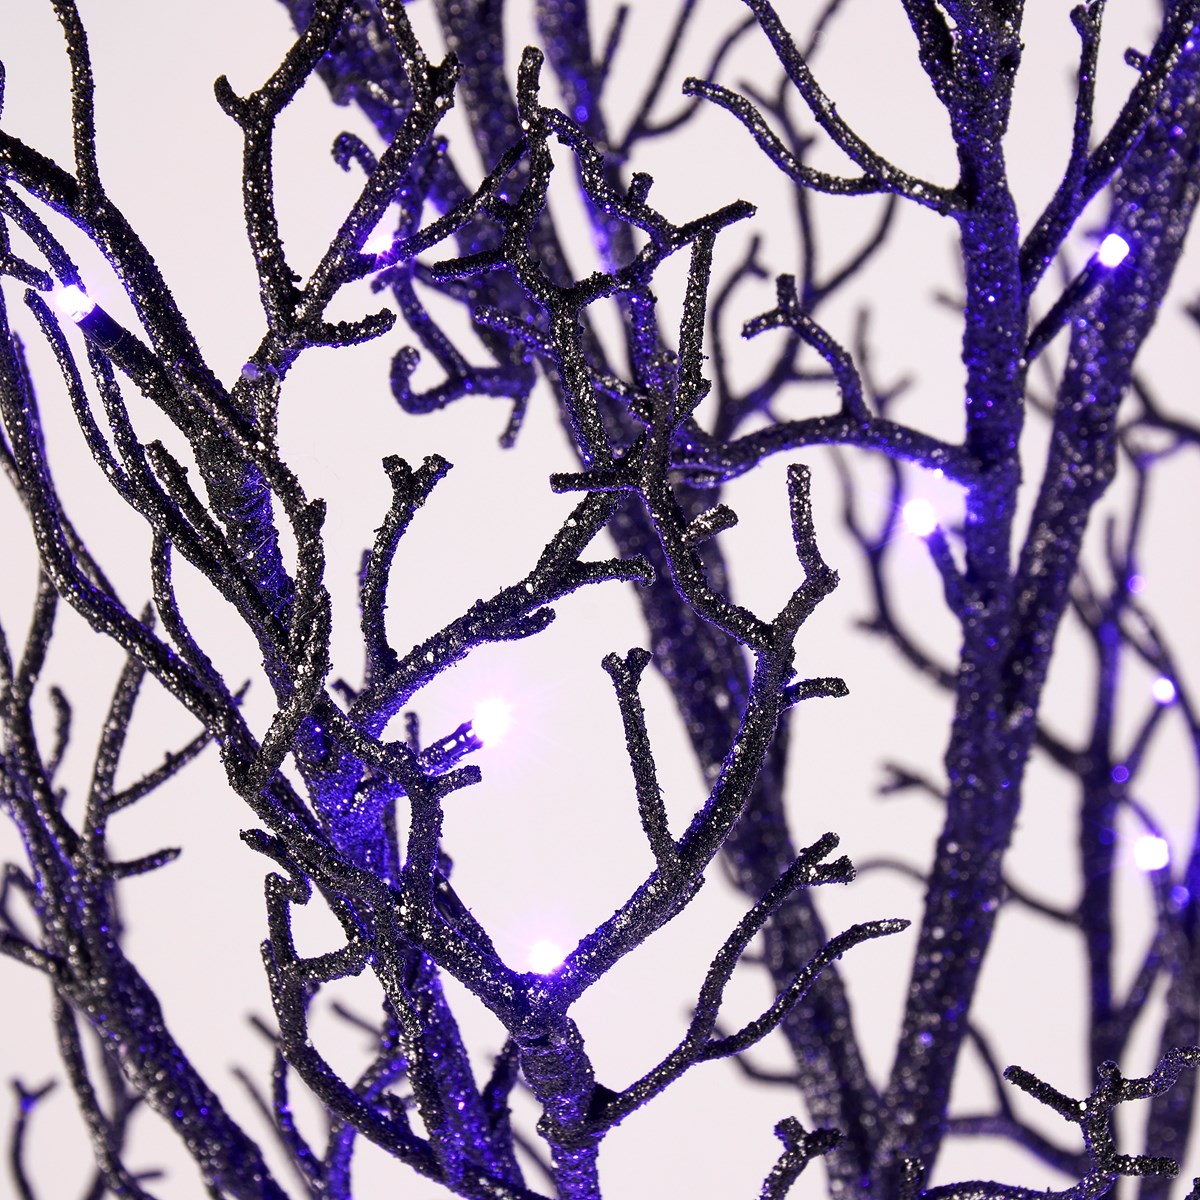 Medium Lighted Black Glitter Tree - Plastic, Cord, Lights, Glitter, Metal